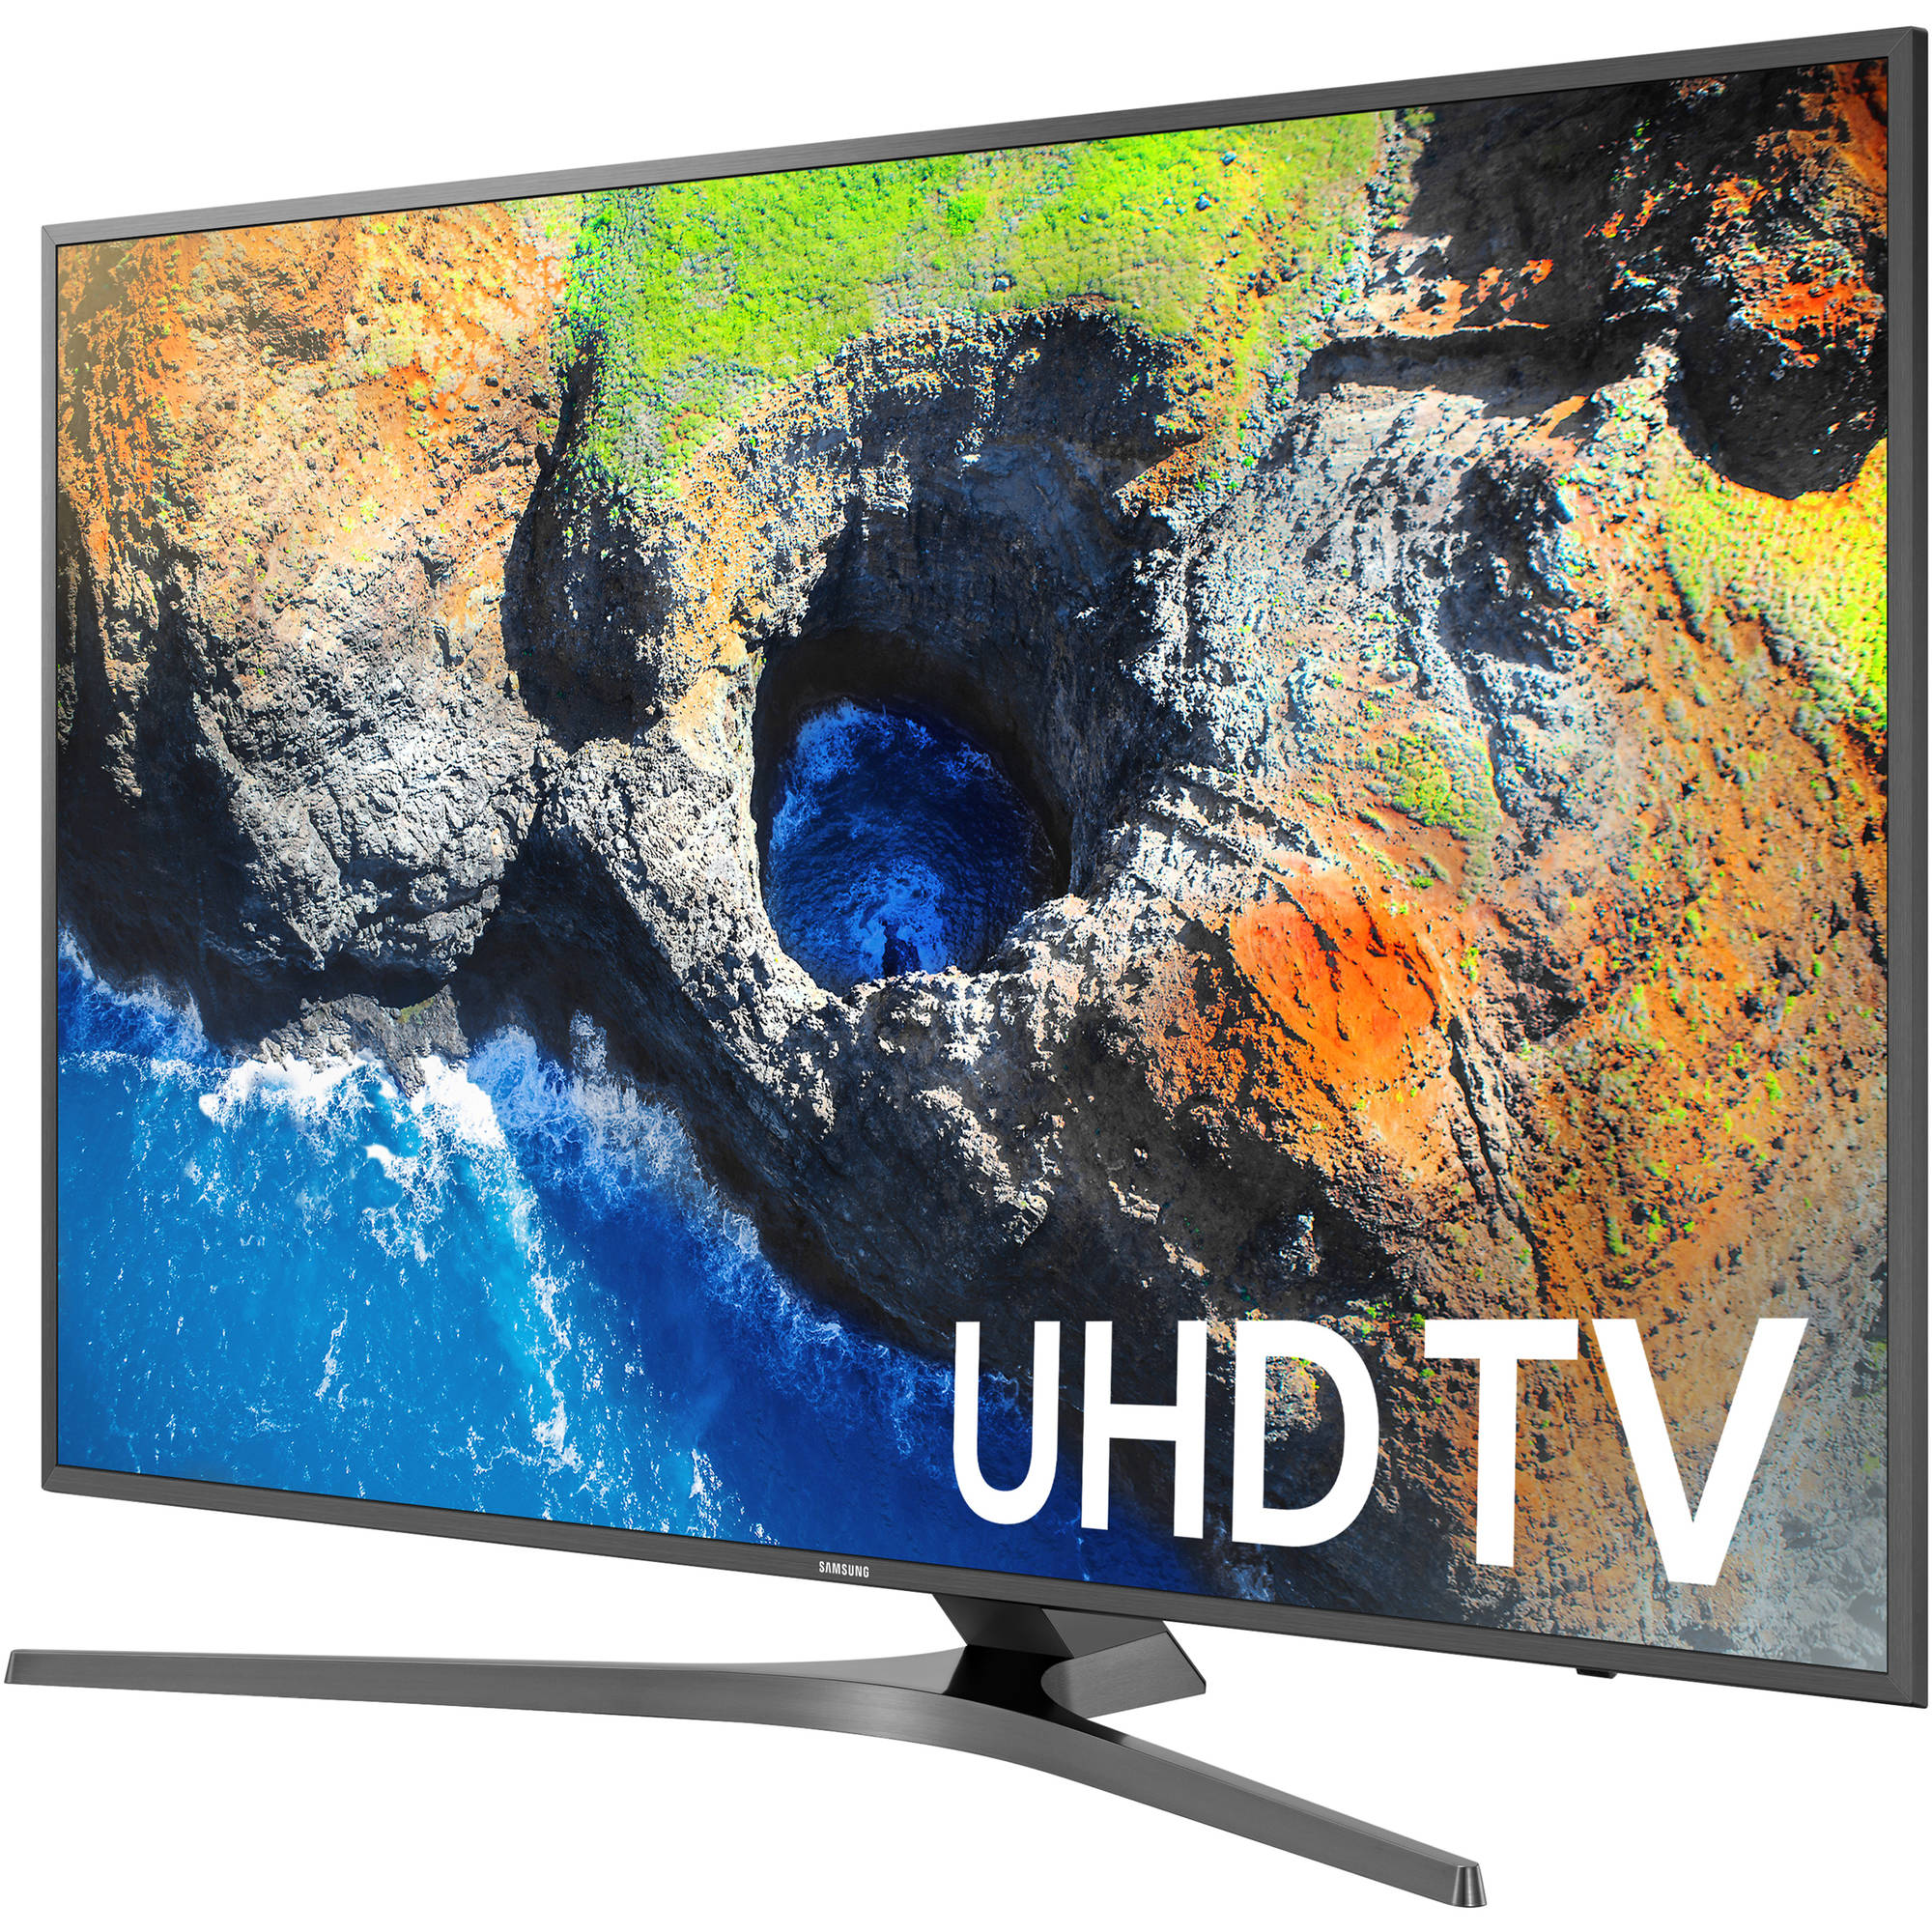 Samsung 49" Class 4K (2160P) Ultra HD Smart LED TV (UN49MU7000FXZA) - image 5 of 15